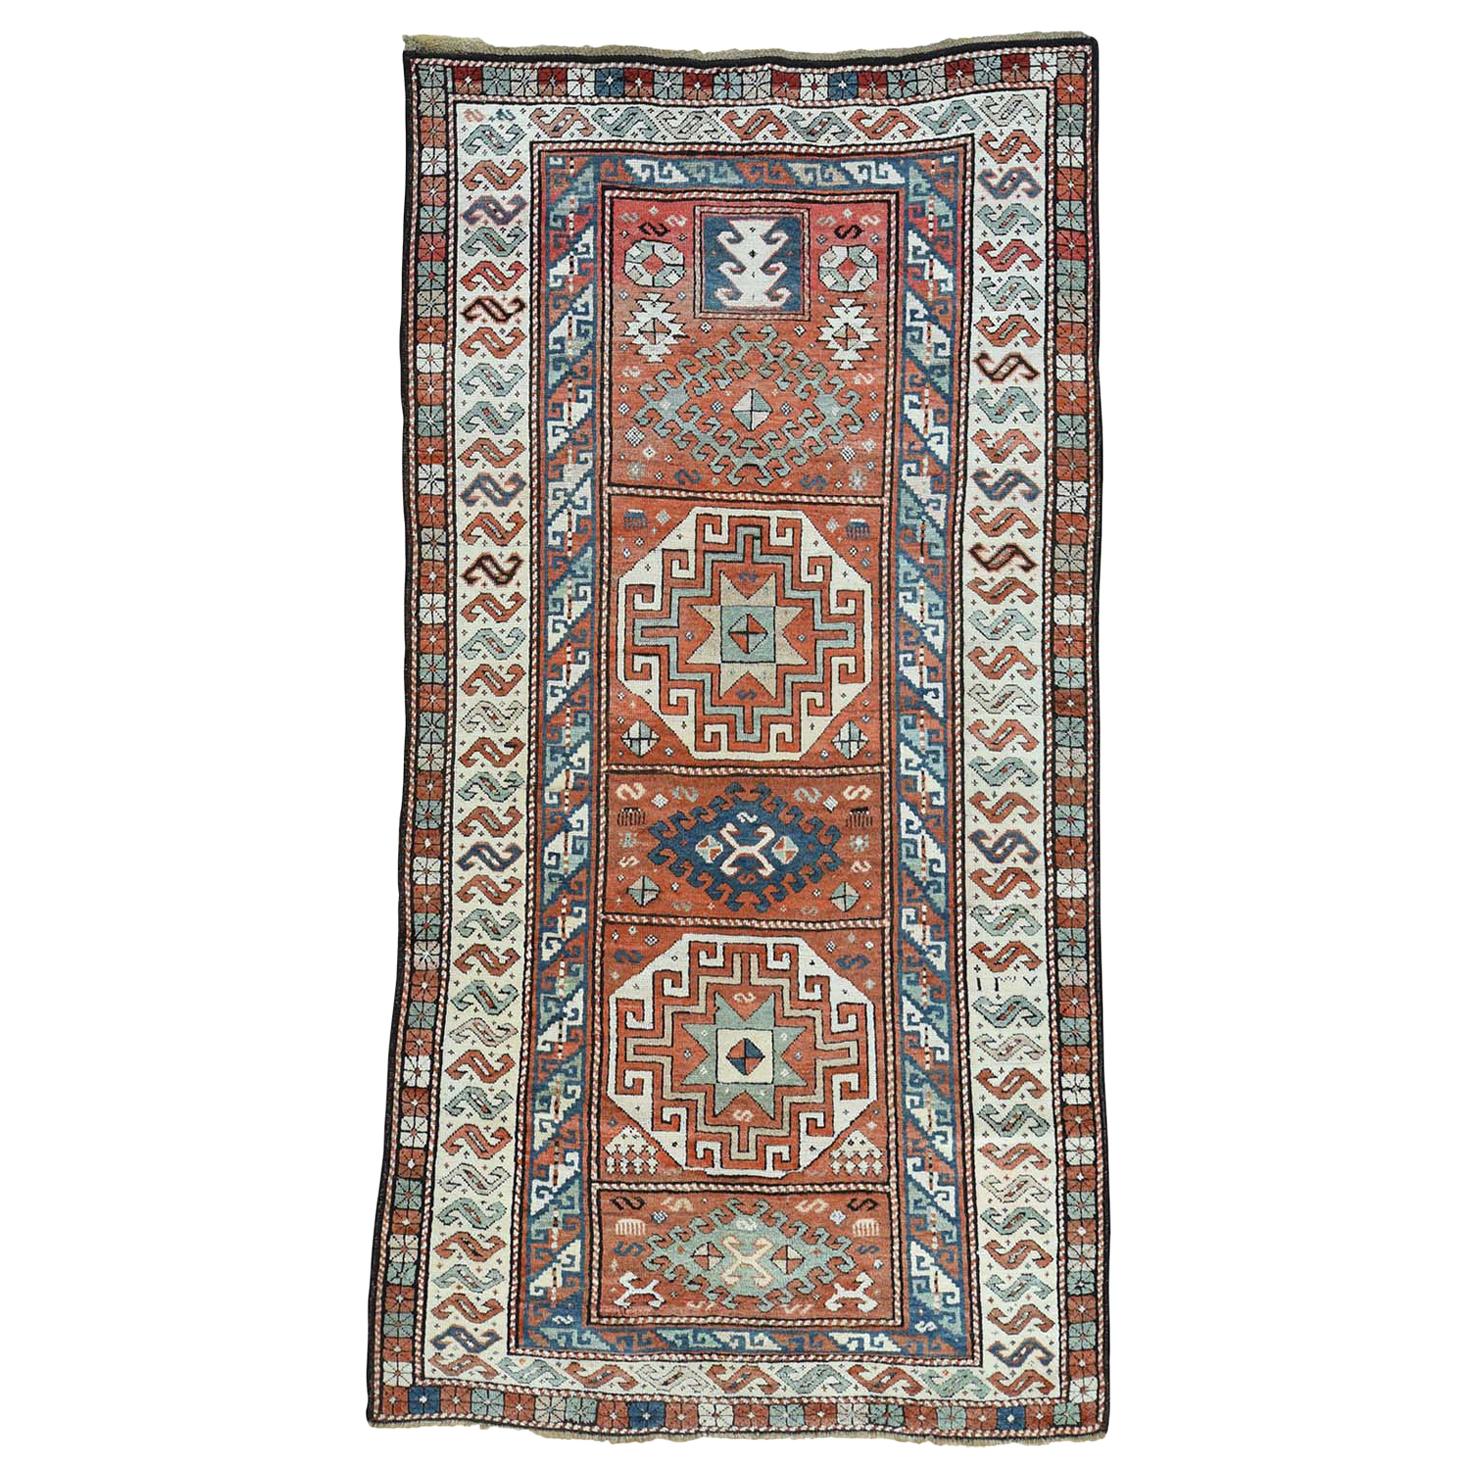 1890 Antique Caucasian Kazak Wide Runner Rug, Clean and Soft Pile